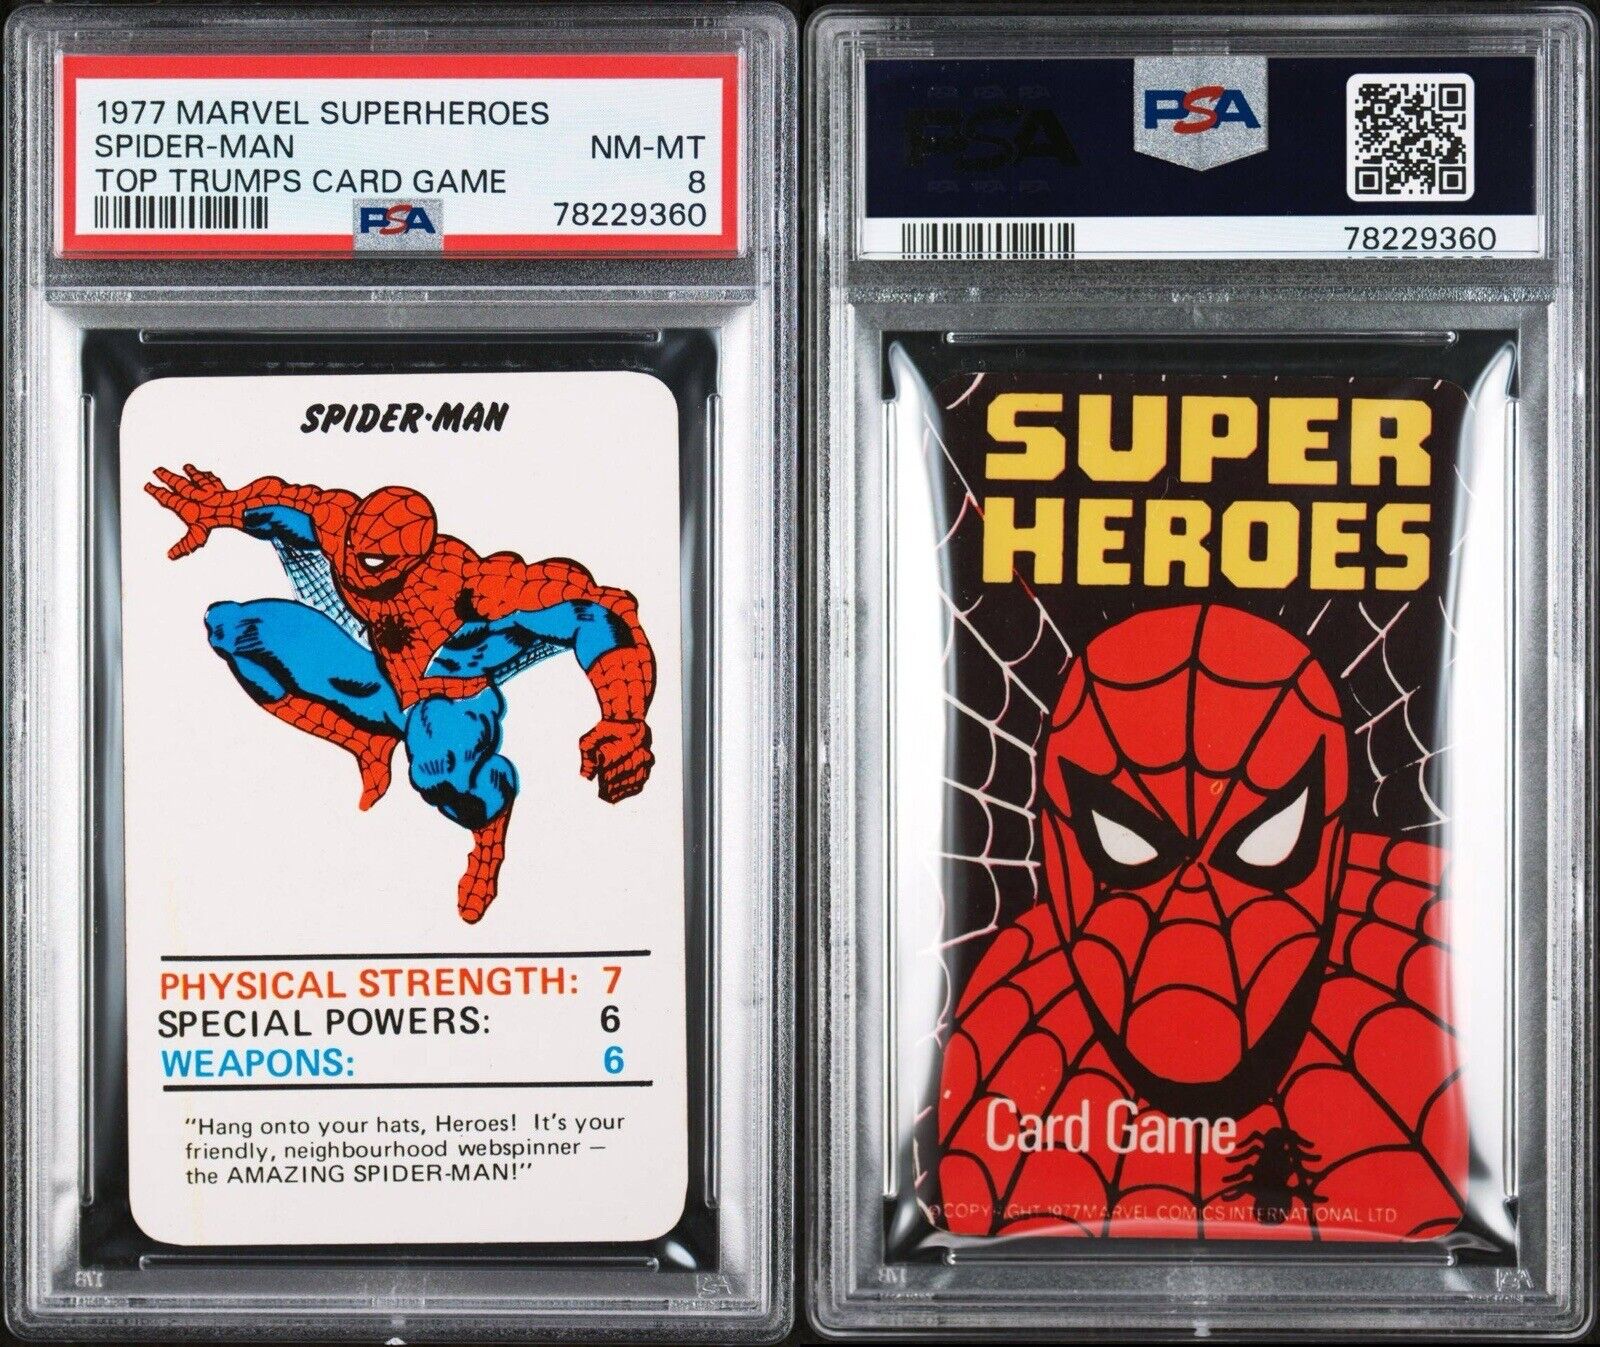 SUPER RARE 1977 MARVEL SUPERHEROES SPIDER-MAN TOP TRUMPS CARD GAME PSA 8 NM-MINT